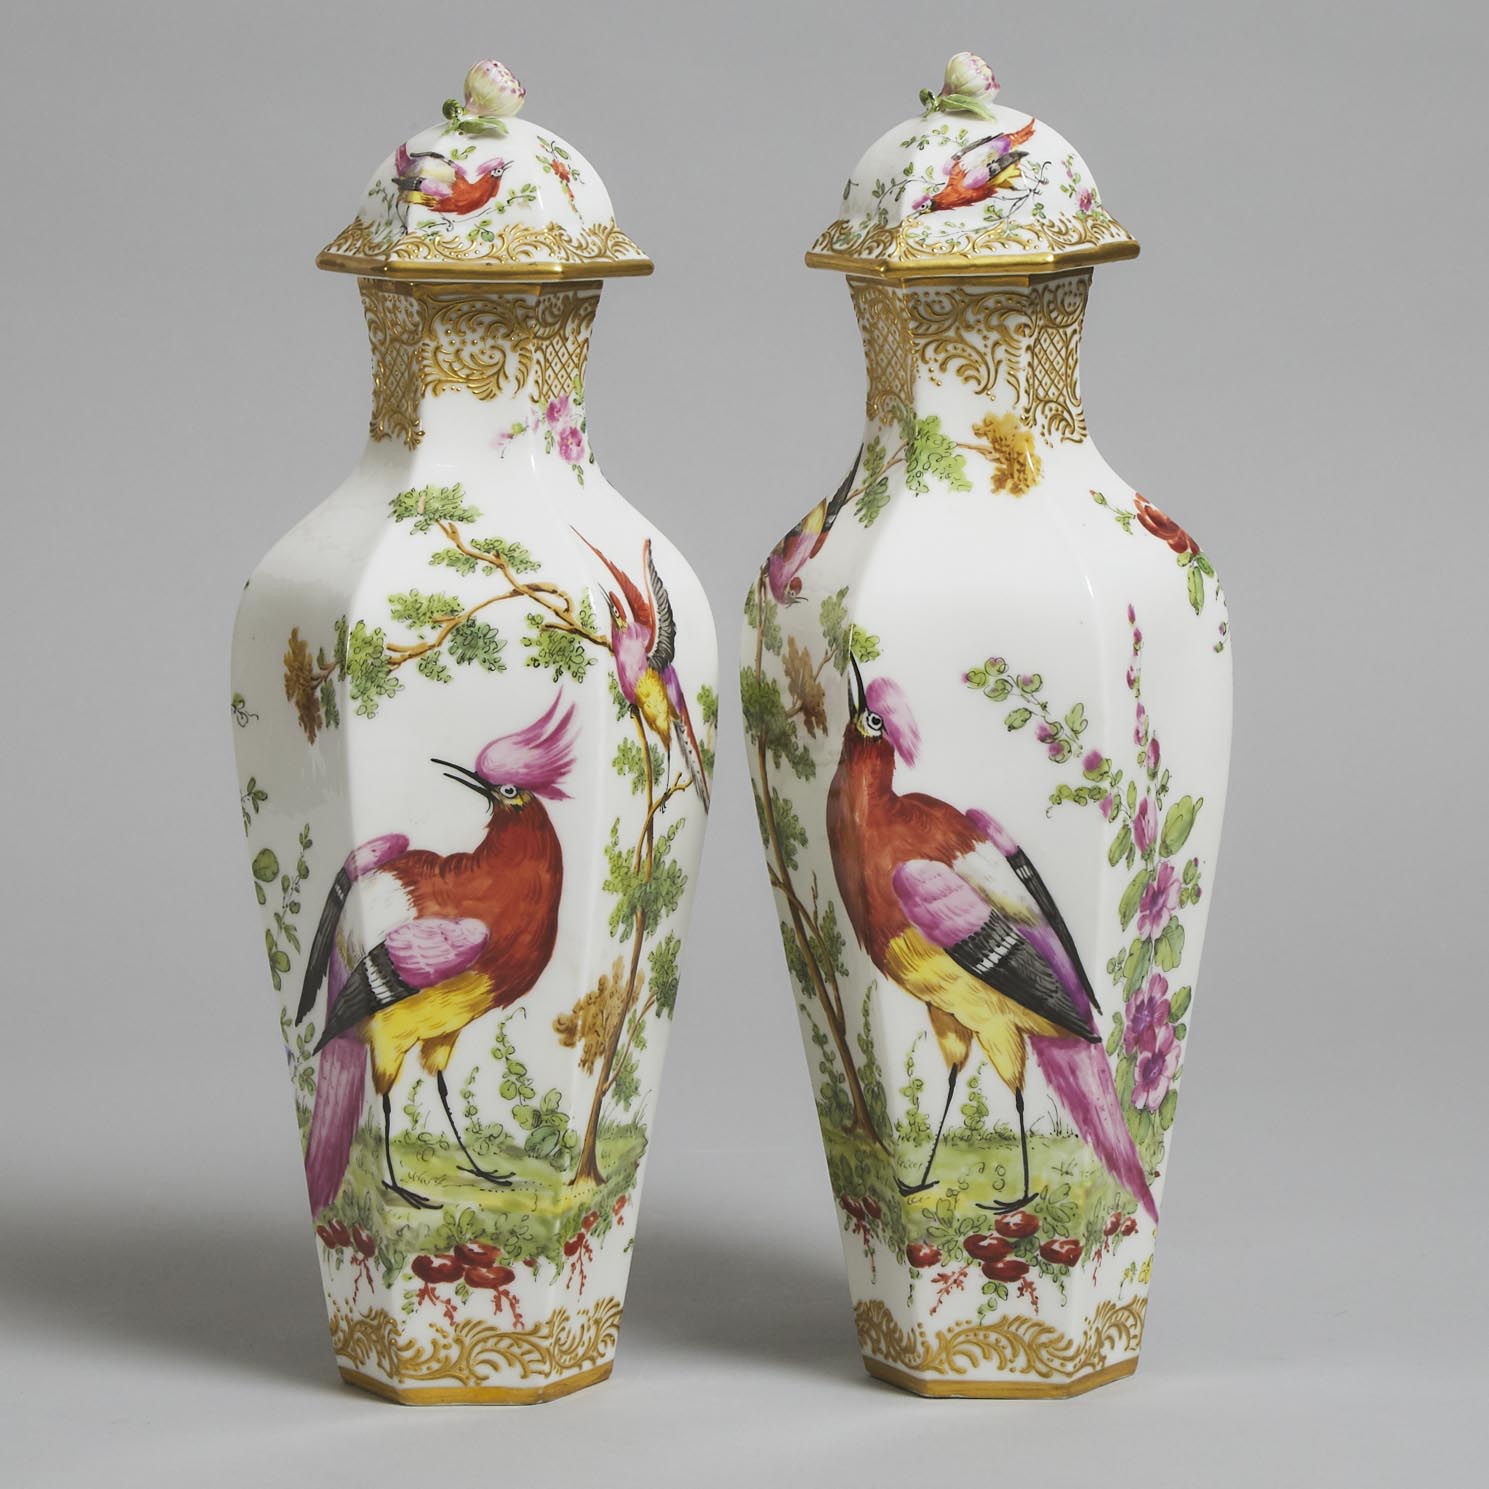 Pair of Samson 'Chelsea' Exotic Bird Hexagonal Covered Vases, c.1900